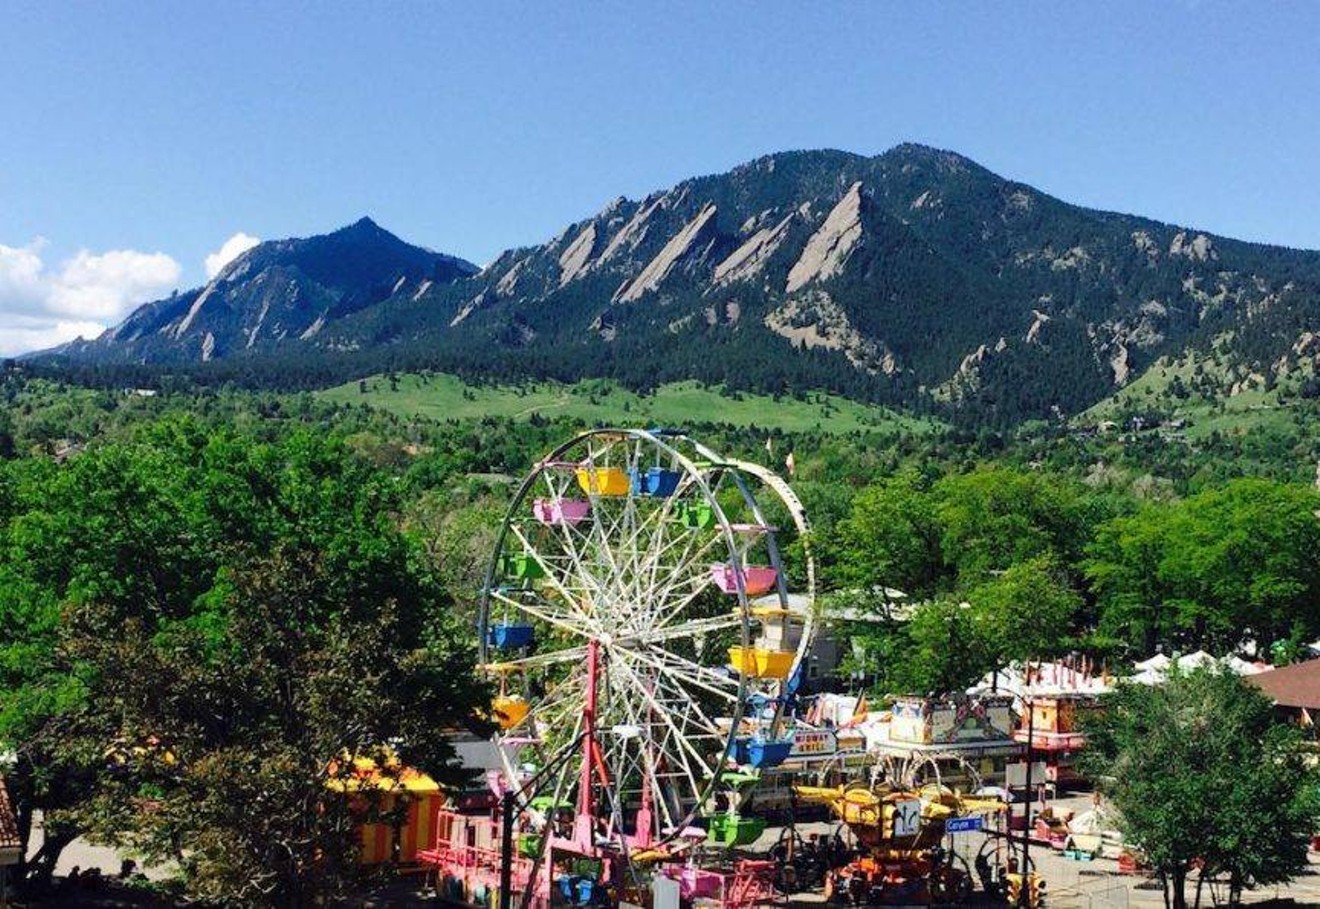 Boulder Creek Festival's Ferris wheel isn't quite as tall as the Flatirons.